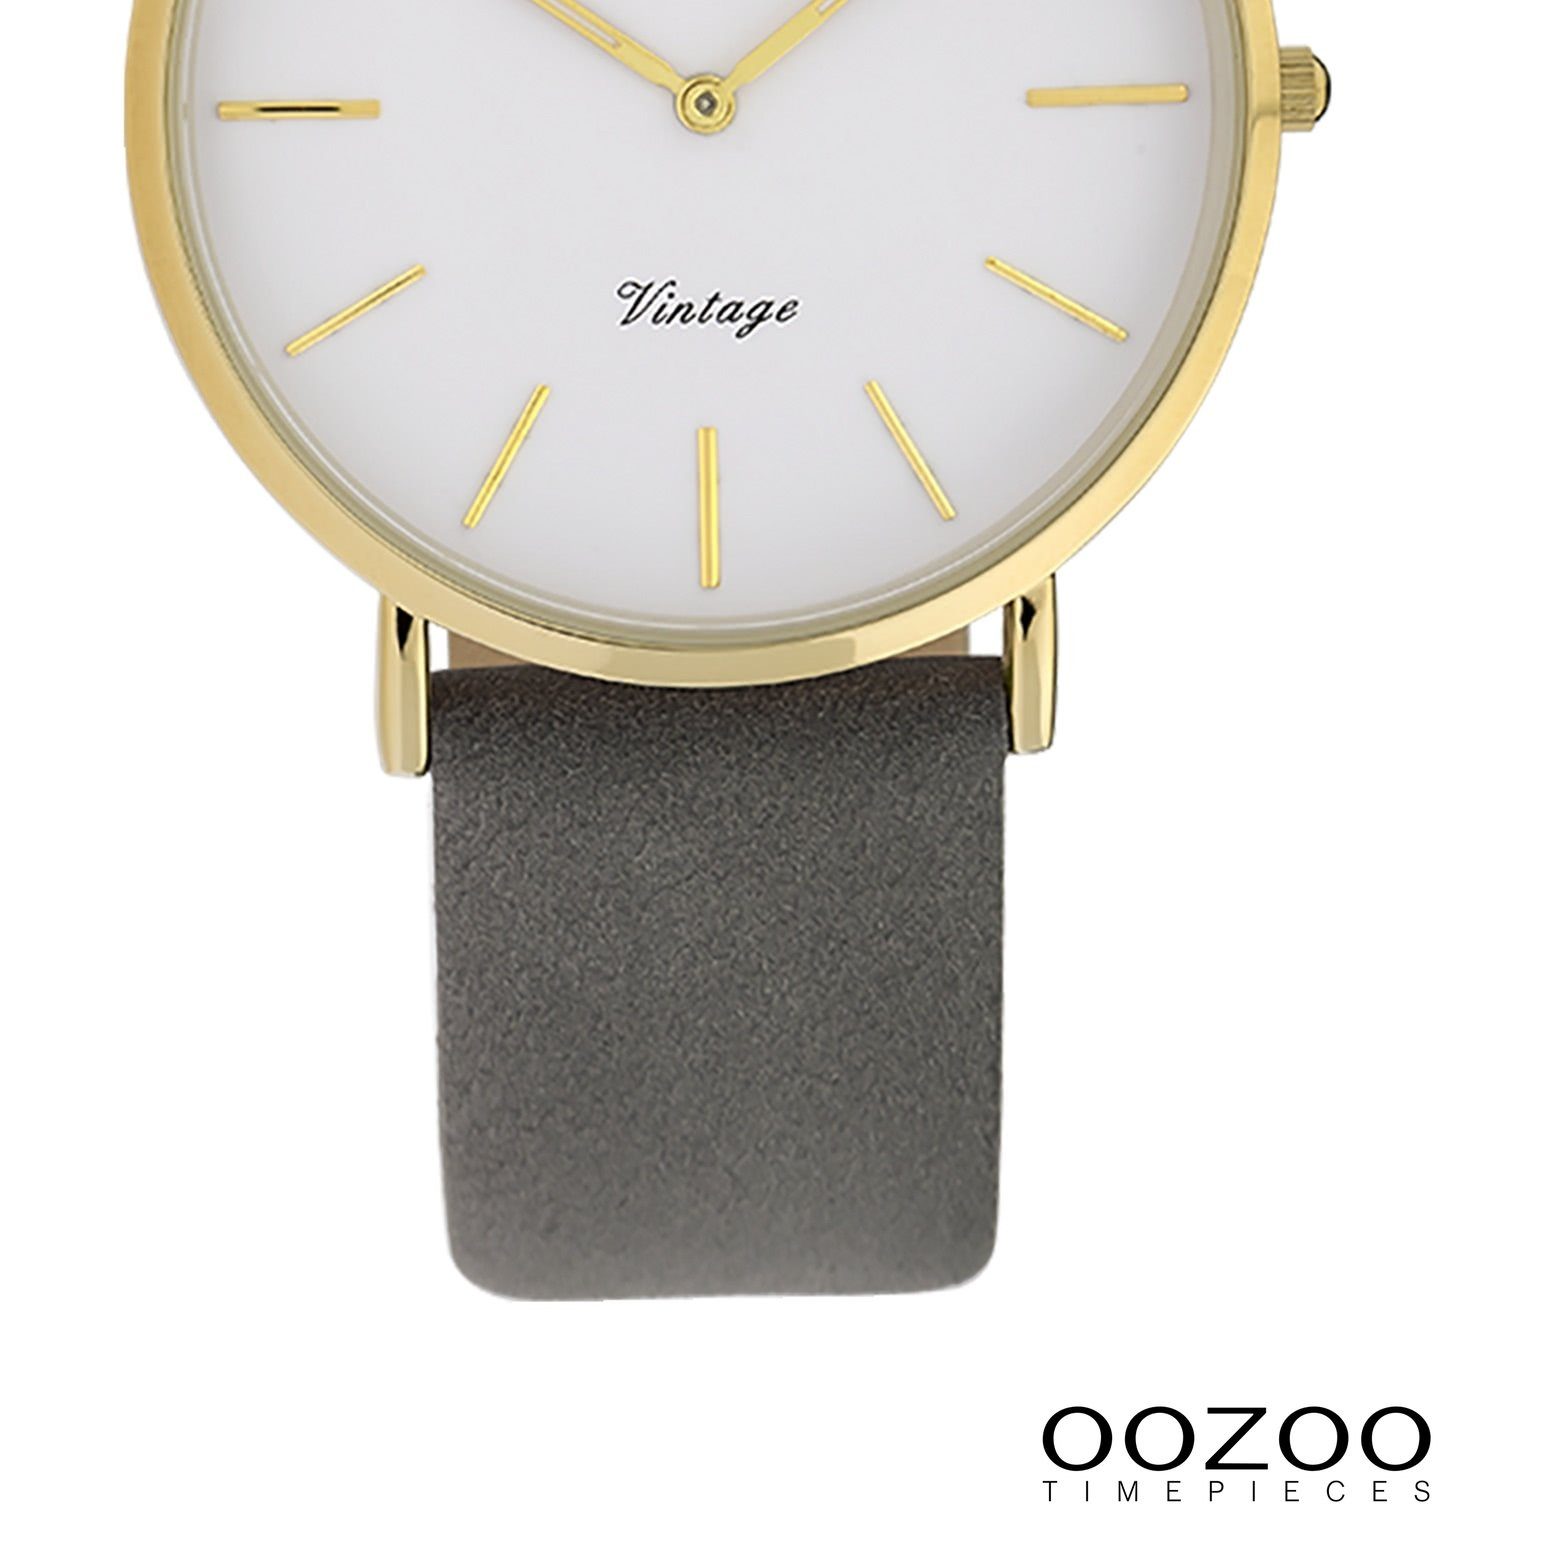 OOZOO Quarzuhr Oozoo Damen Lederarmband, Fashion-Style rund, 32mm) Armbanduhr mittel (ca. Damenuhr OOZOO Vintage